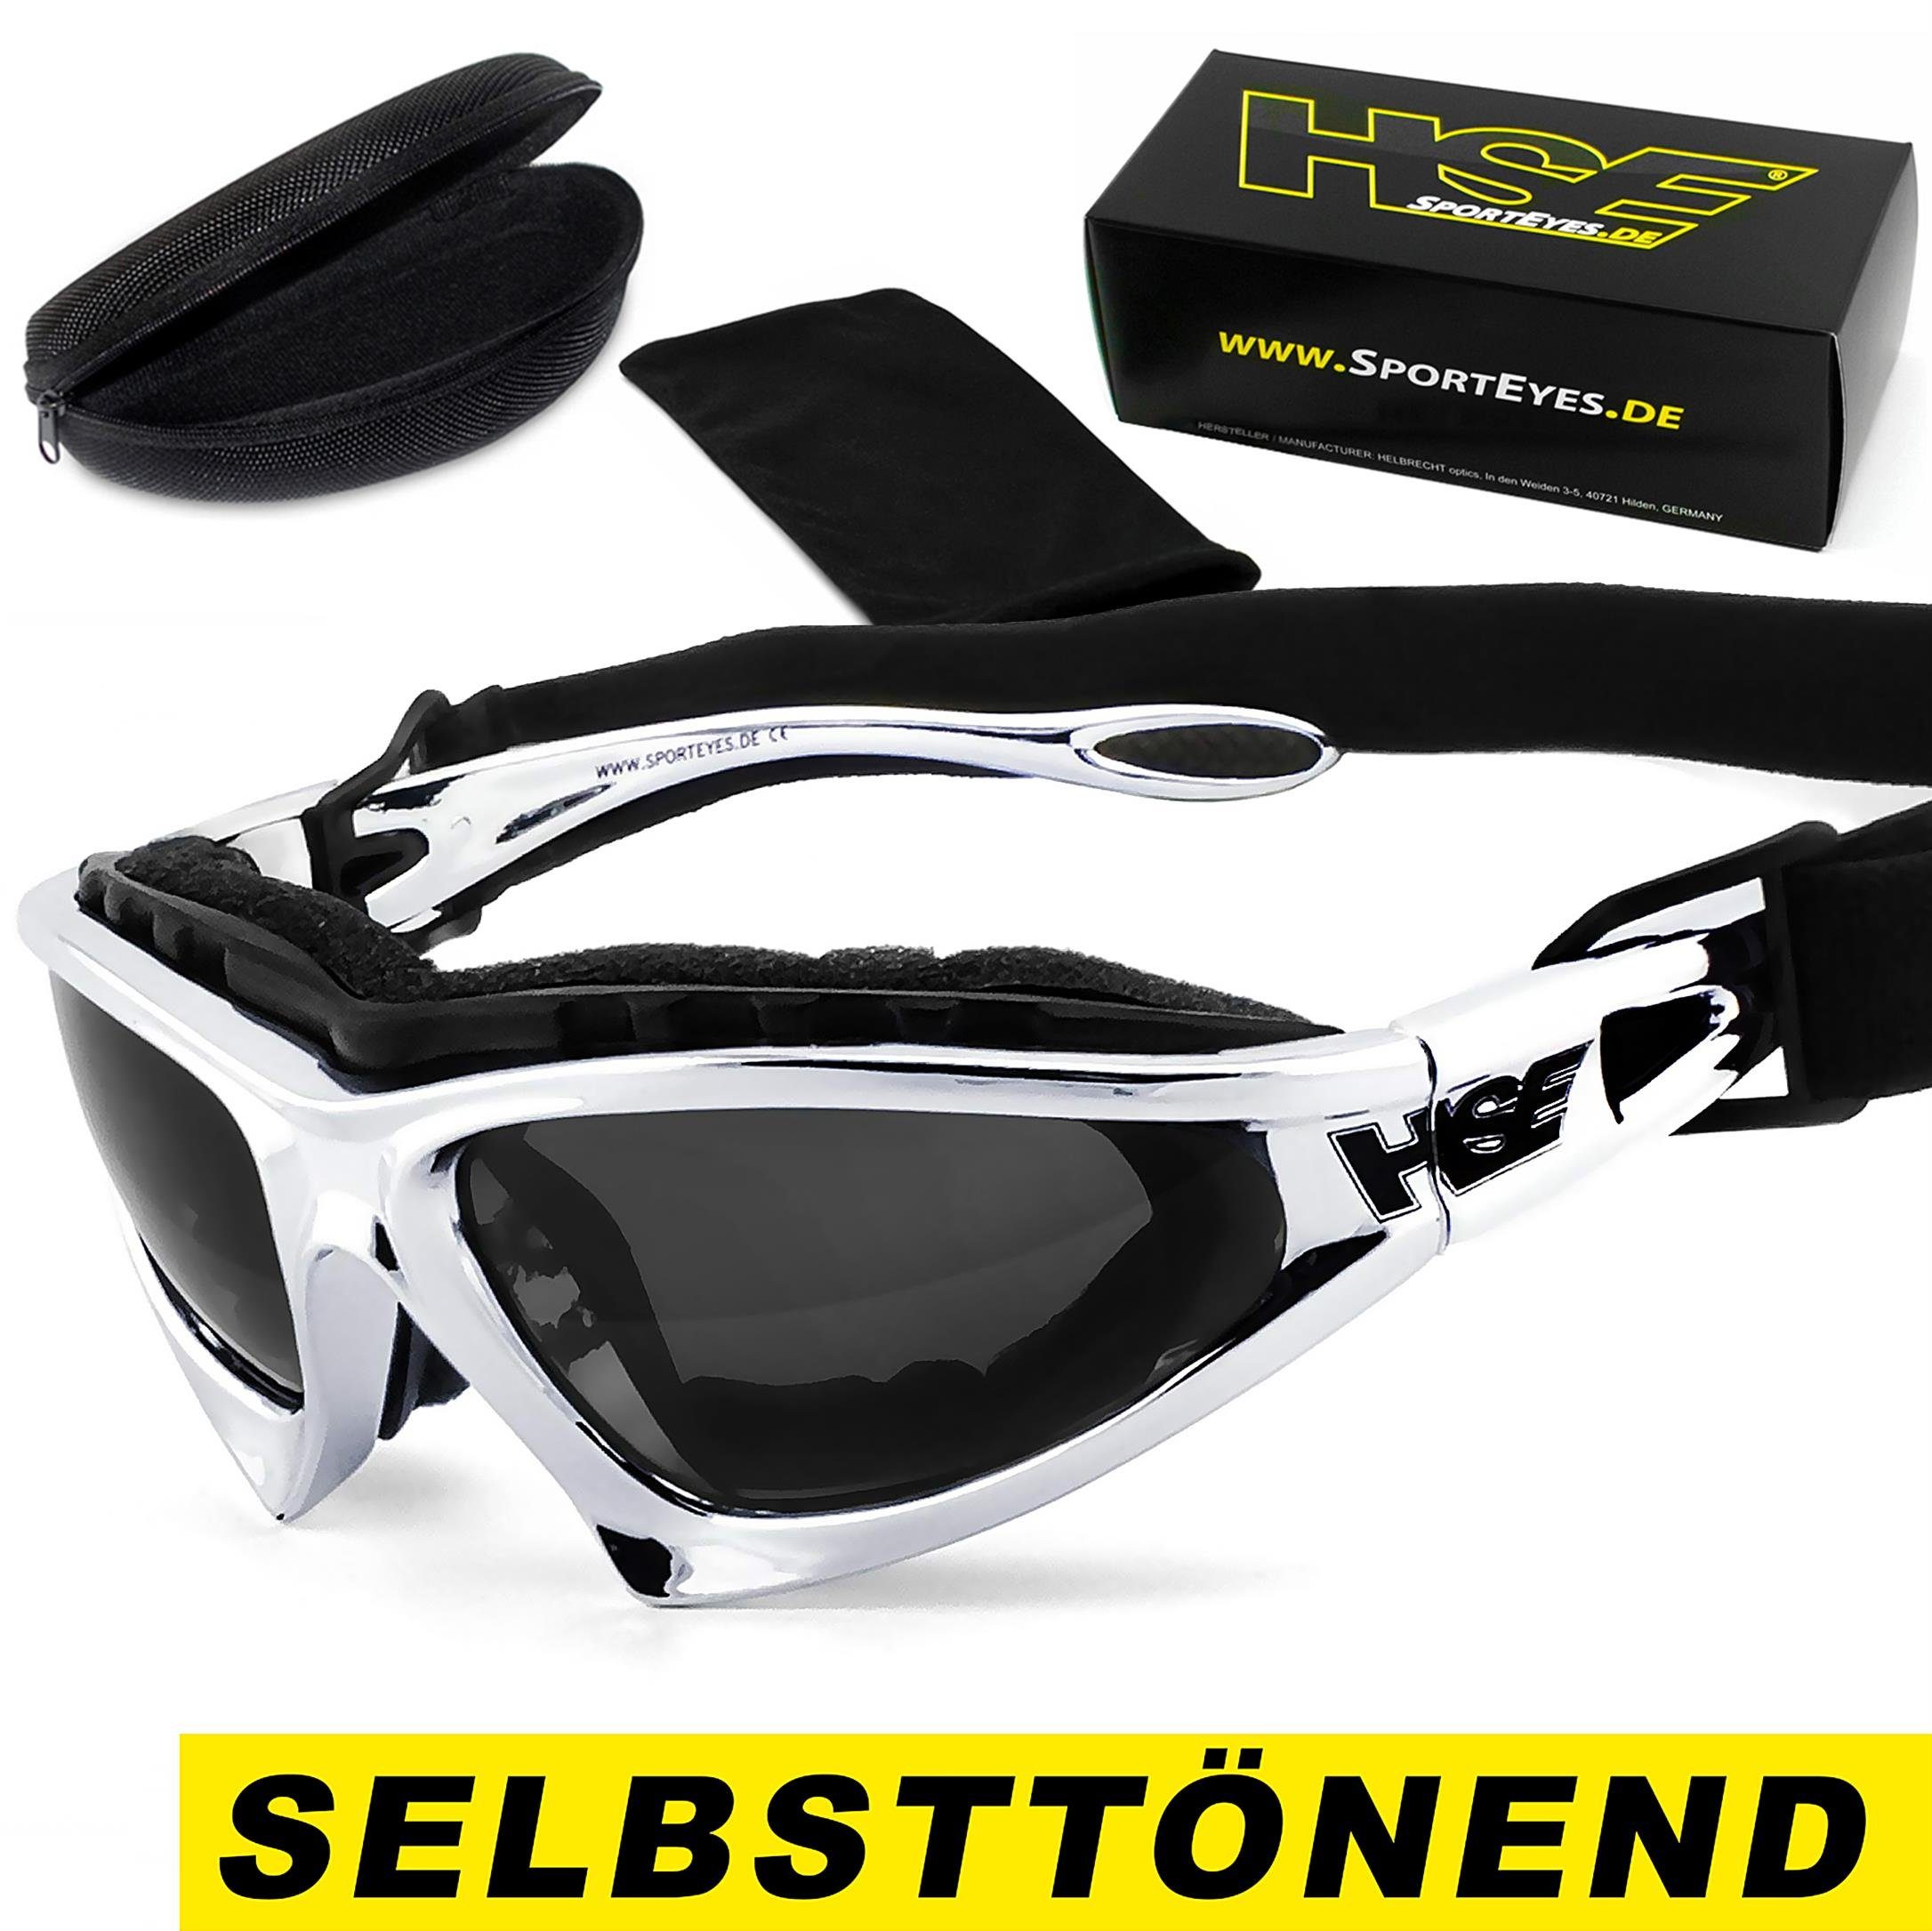 HSE - SportEyes Motorradbrille FALCON-X - selbsttönend, schnell selbsttönende Gläser